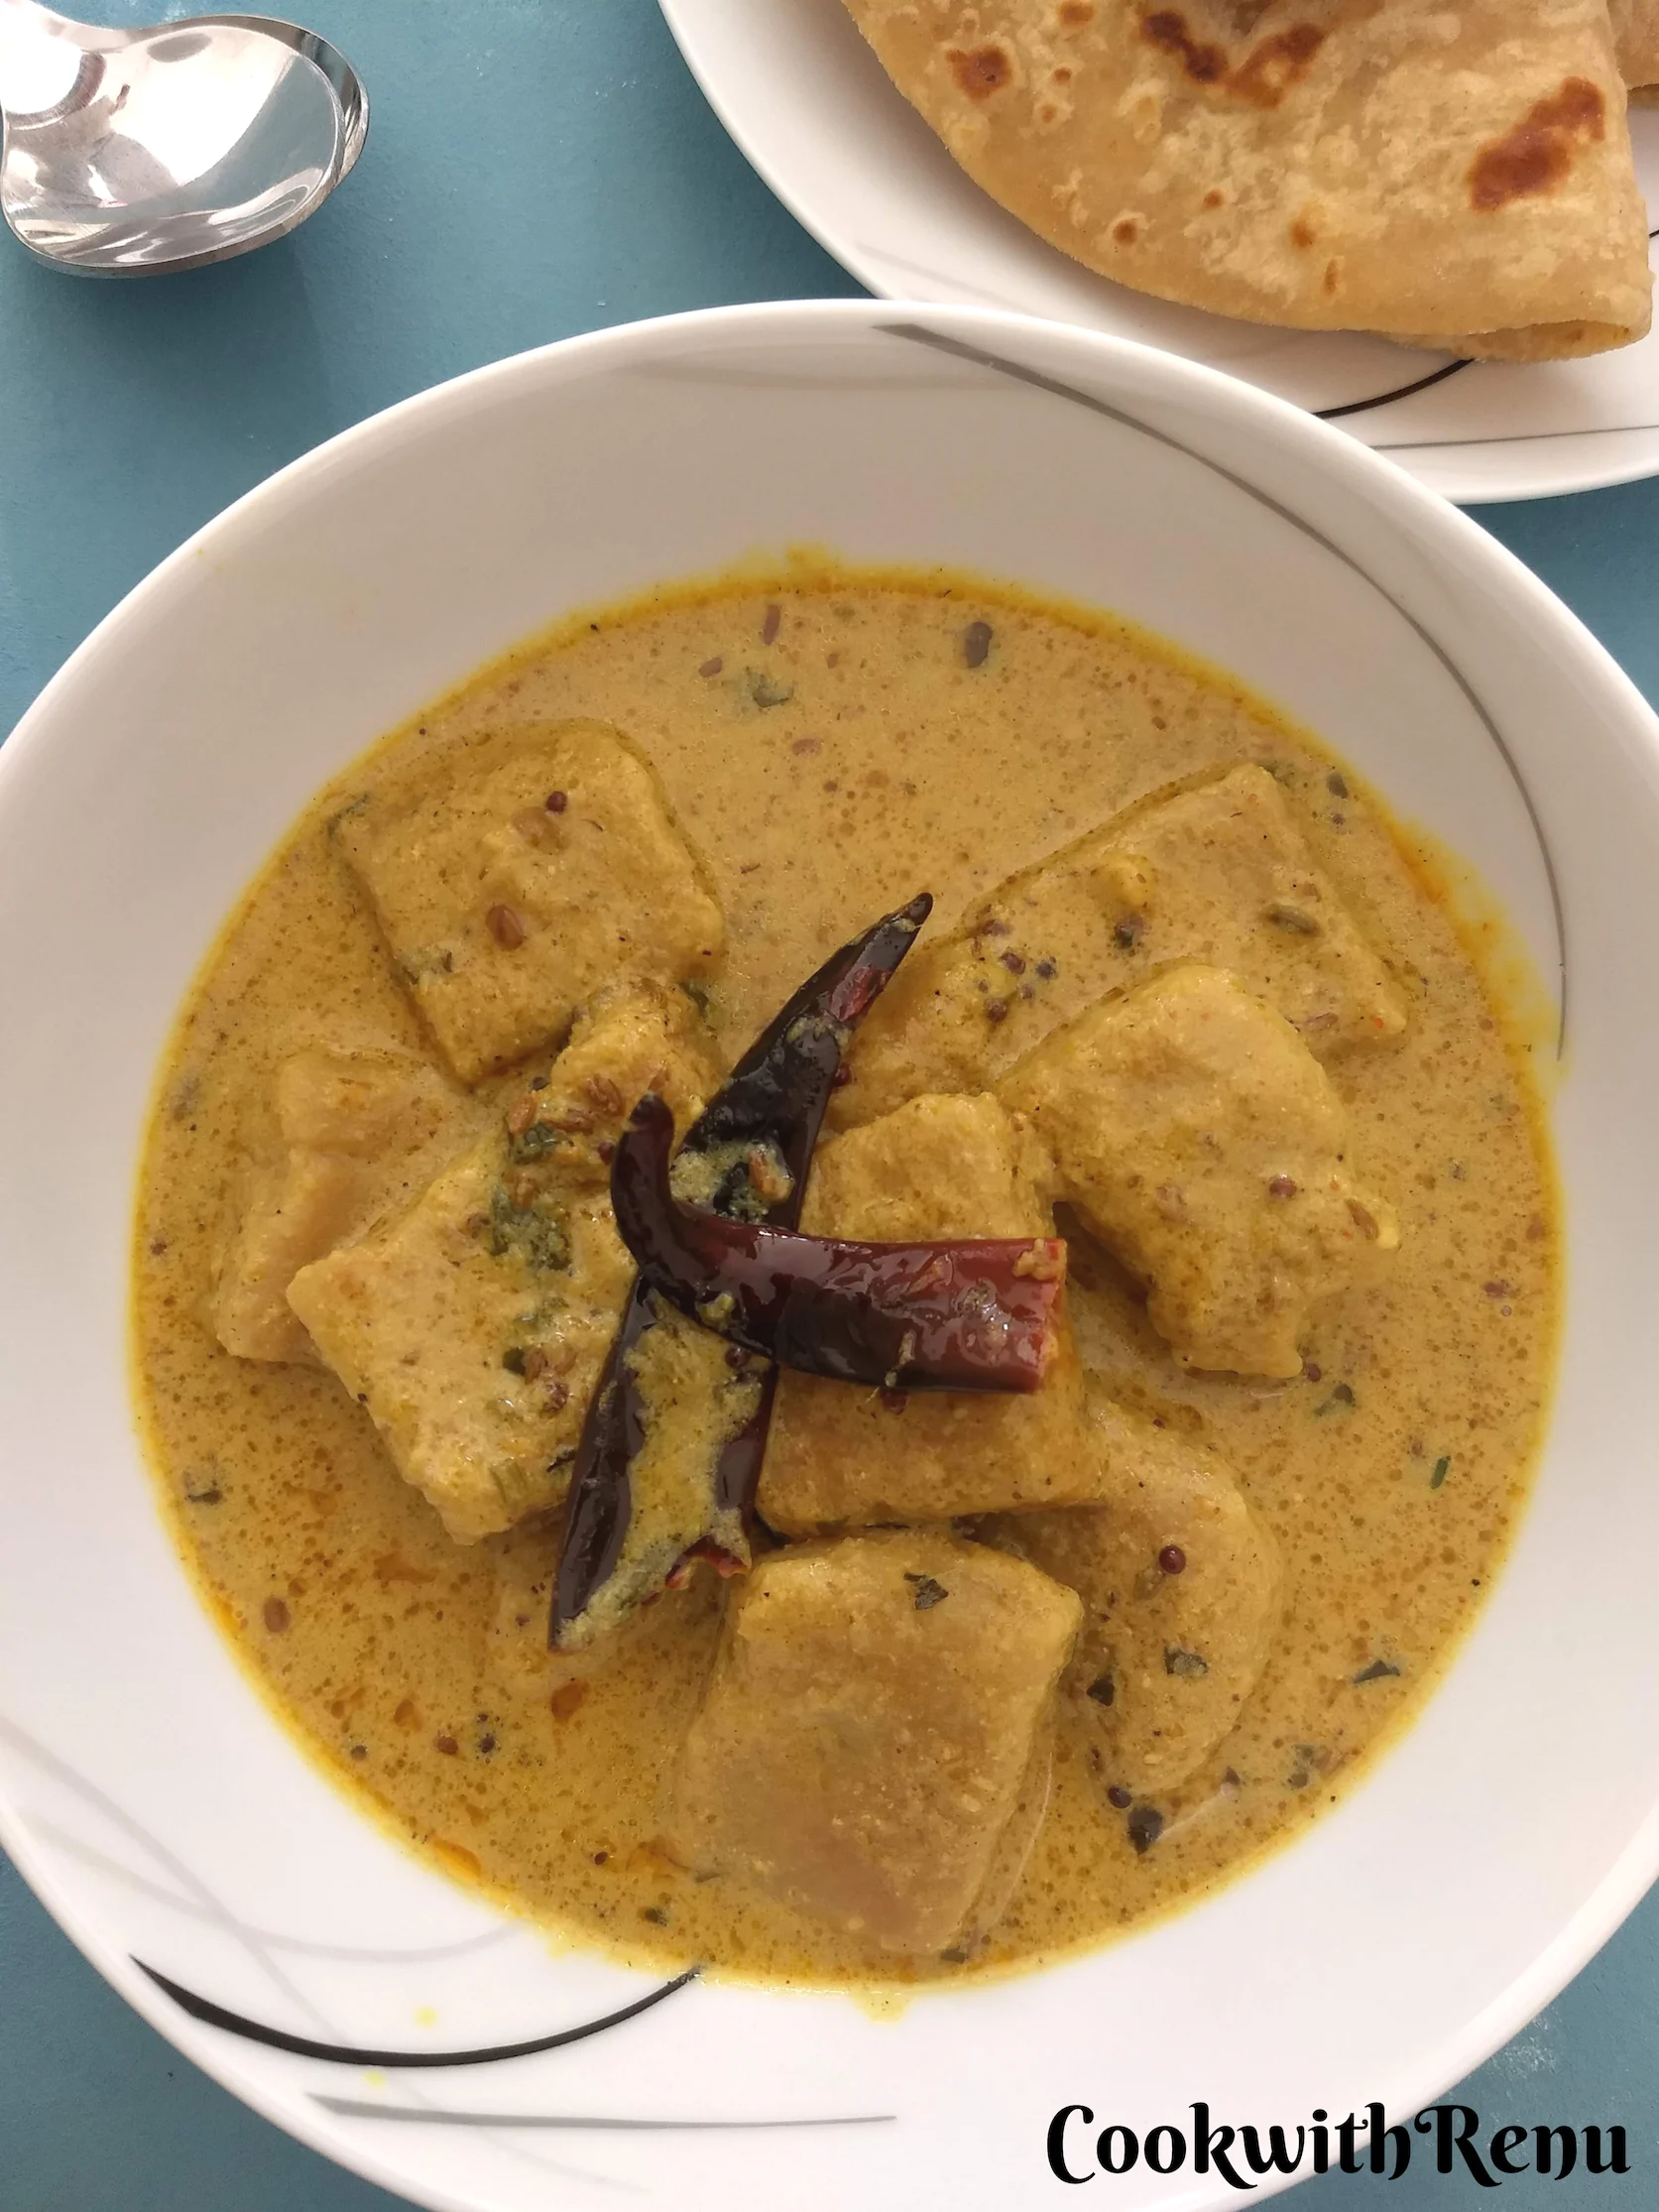 Chakki ki Sabji | Ate ki Sabji (Tangy and spicy gravy with Whole wheat flour Dumplings)